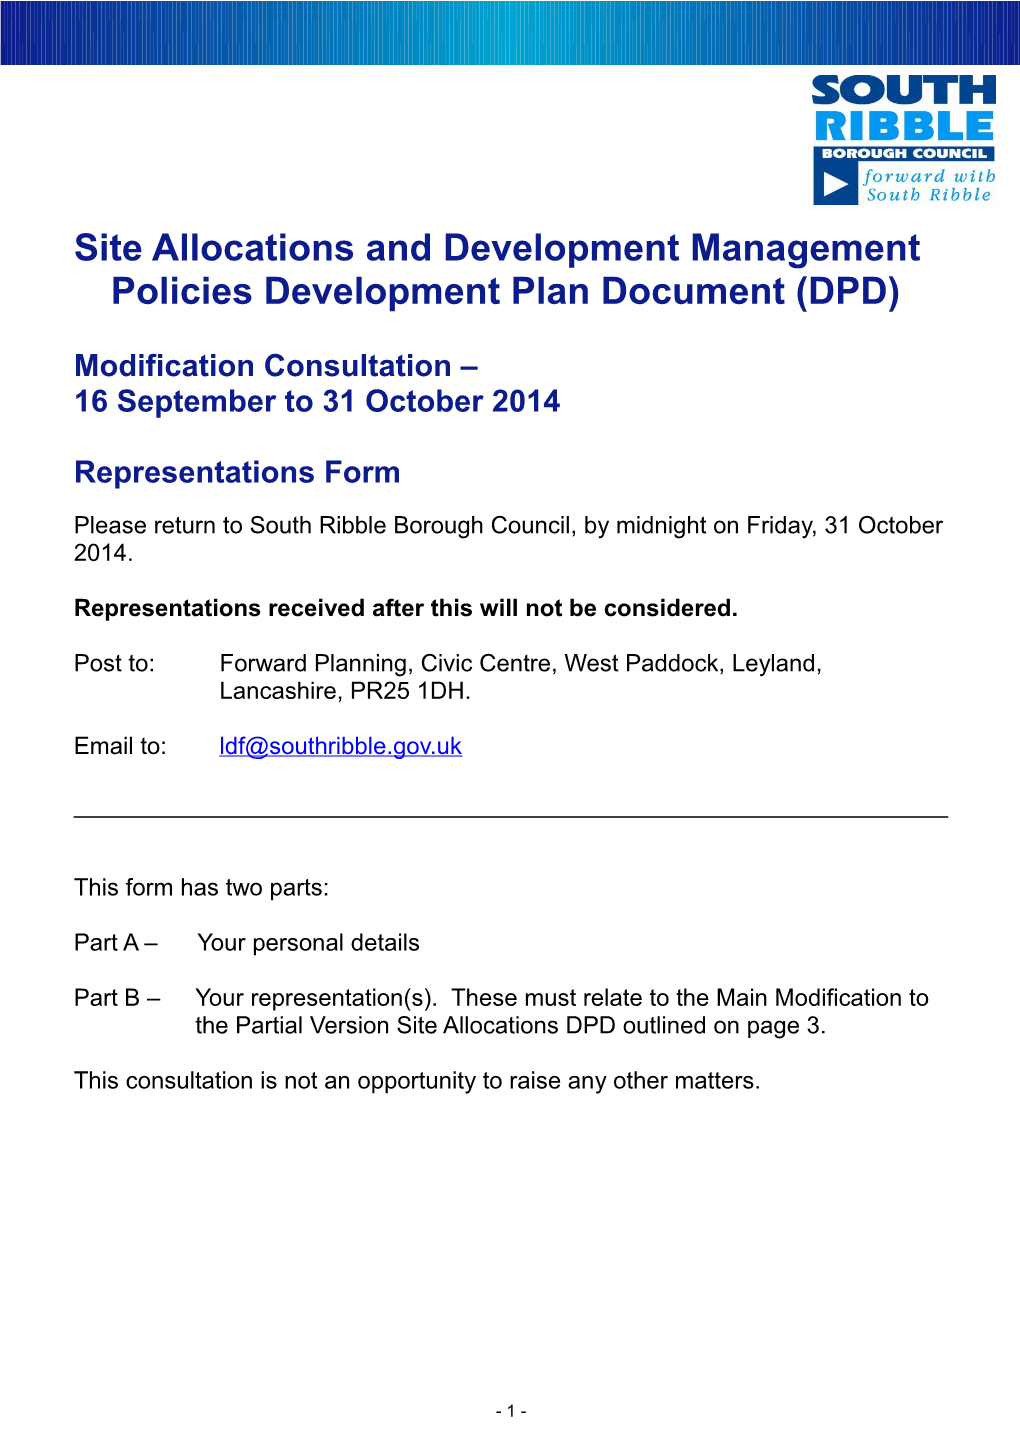 Site Allocations and Development Management Policies Development Plan Document (DPD)